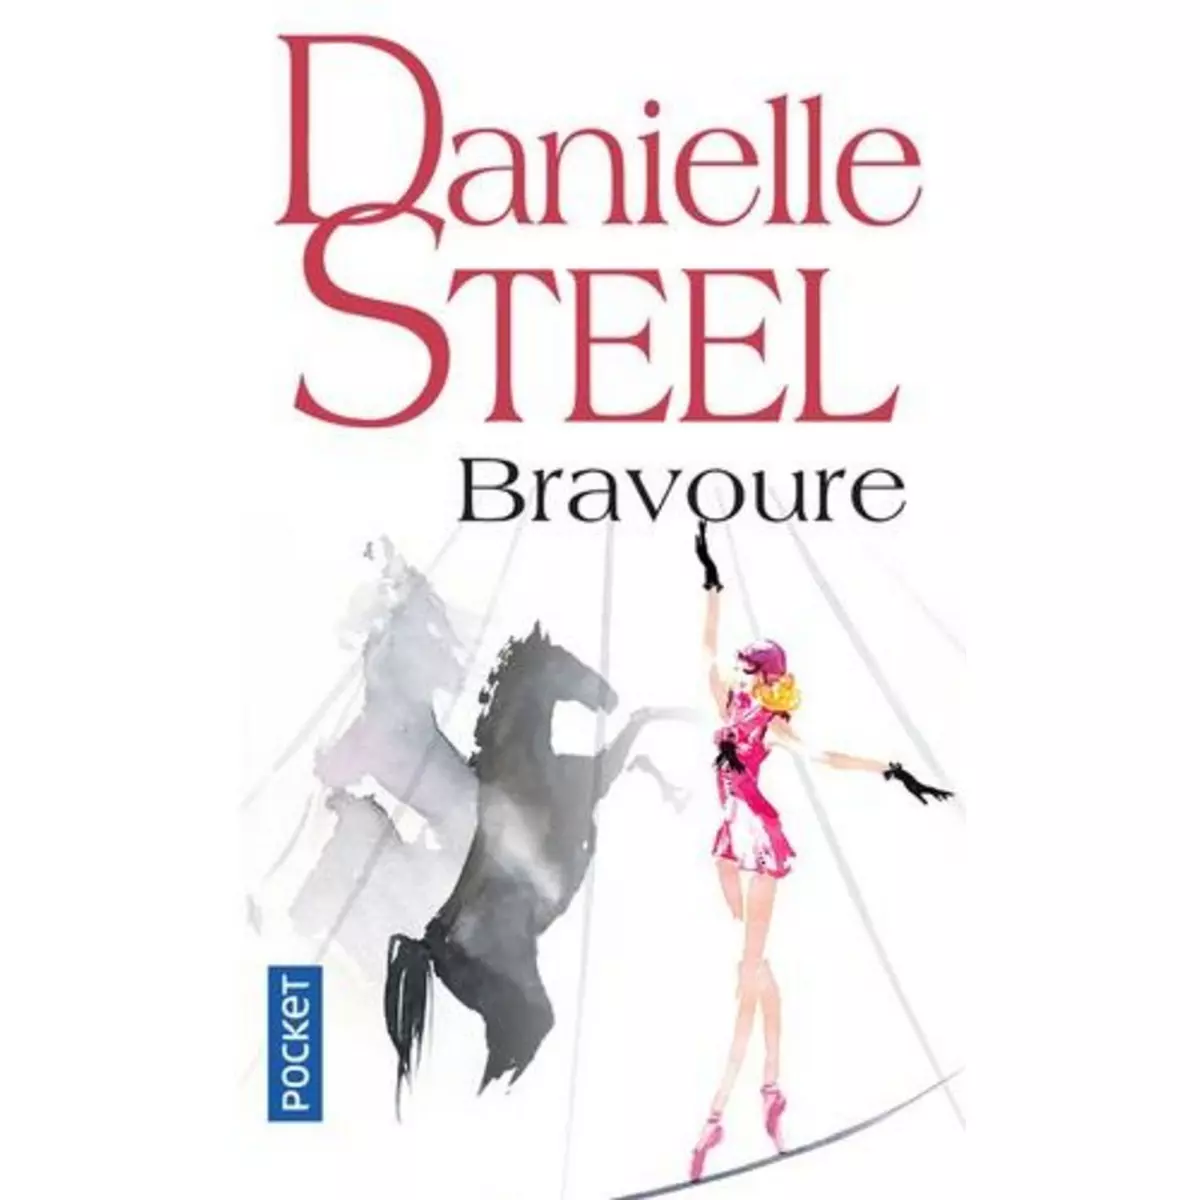  BRAVOURE, Steel Danielle